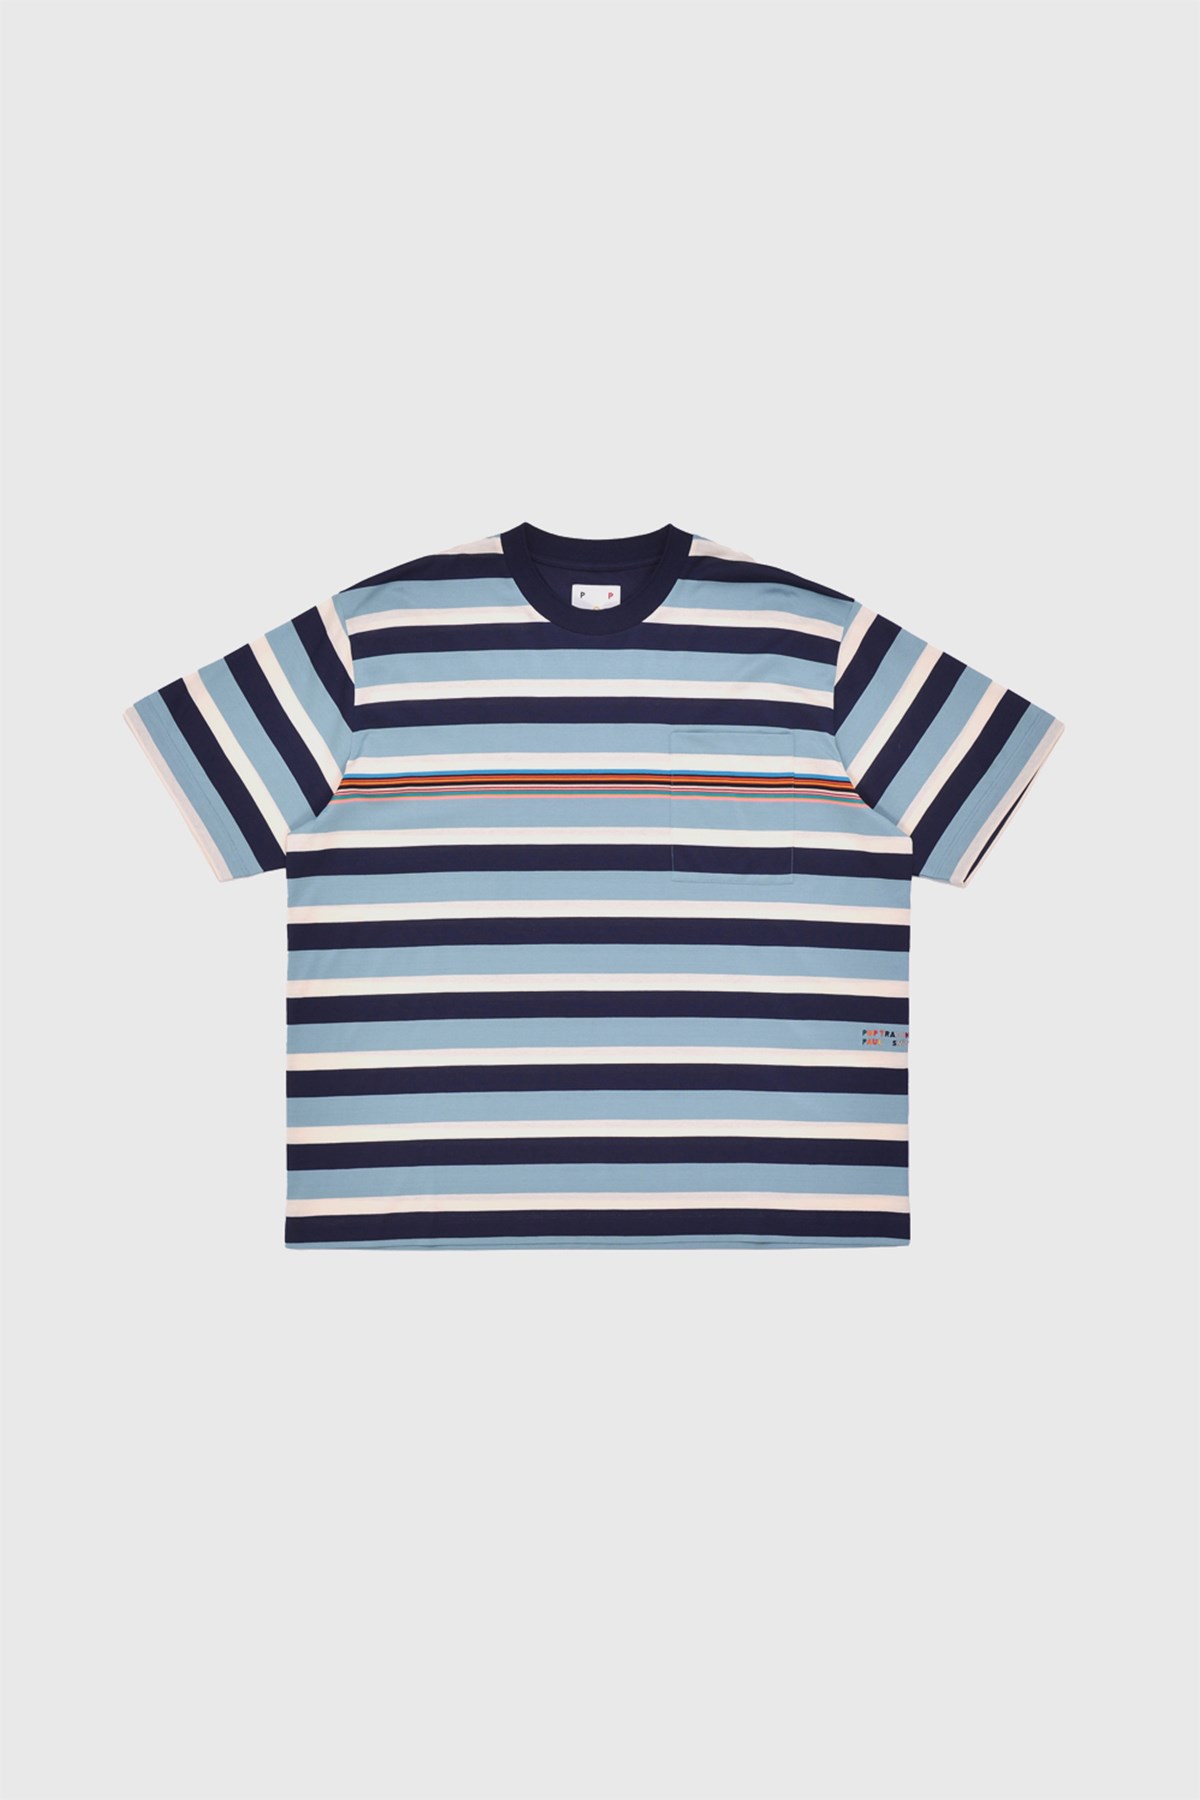 Pop Trading Company Paul Smith Stripe T-Shirt Stripe | WoodWood.com